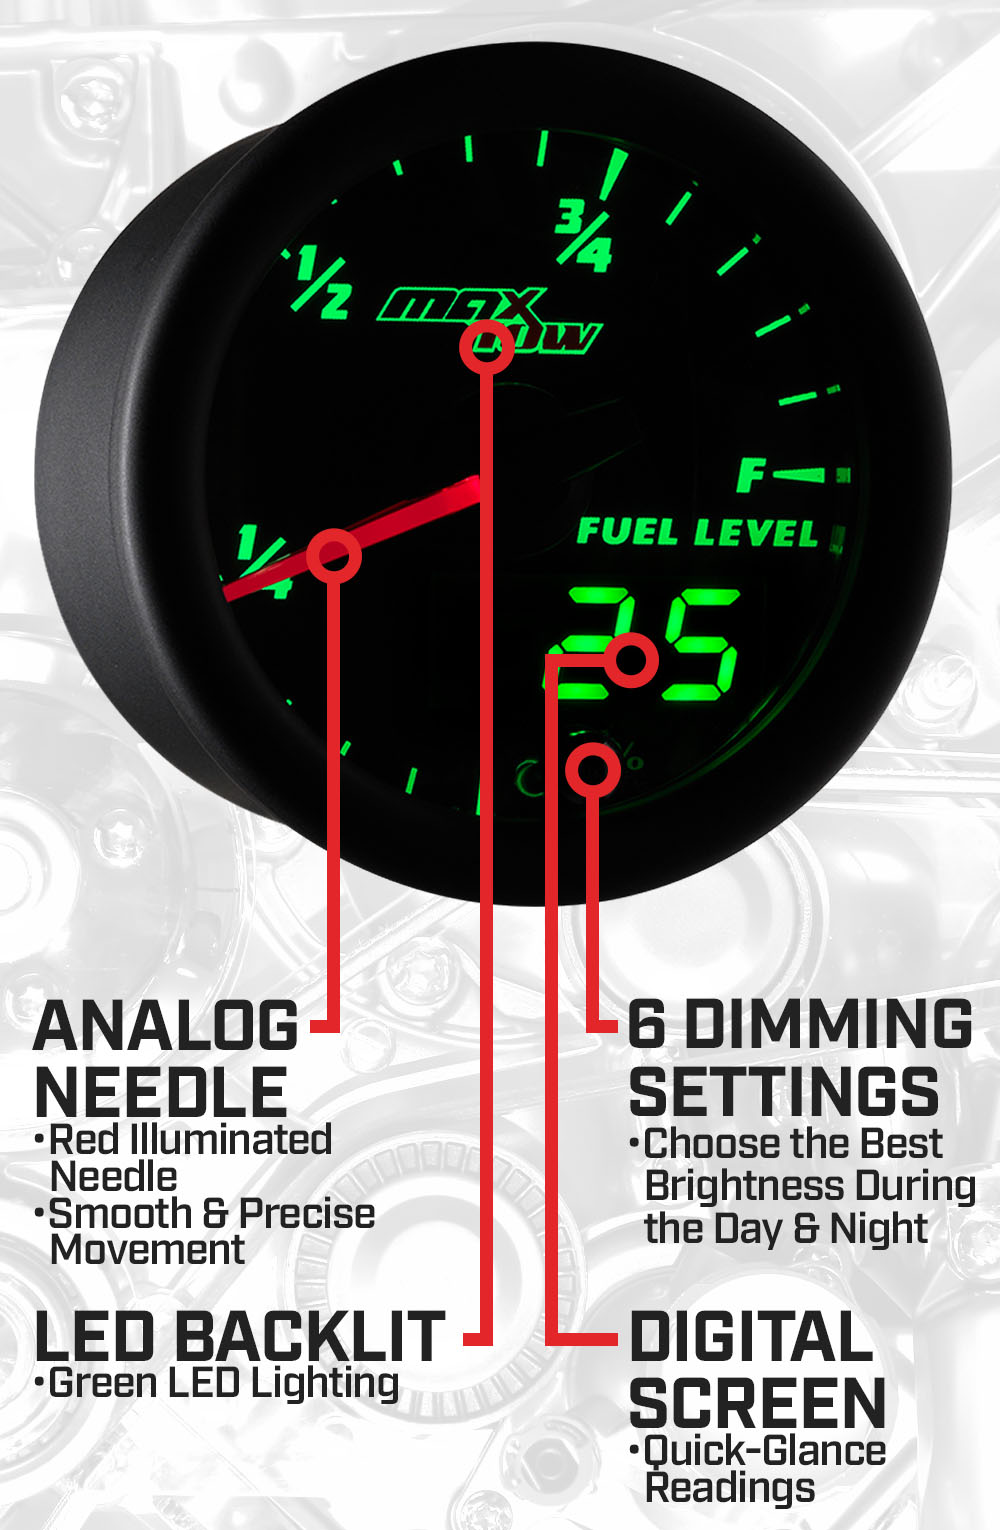 Black & Green Double Vision Fuel Level Gauge Features